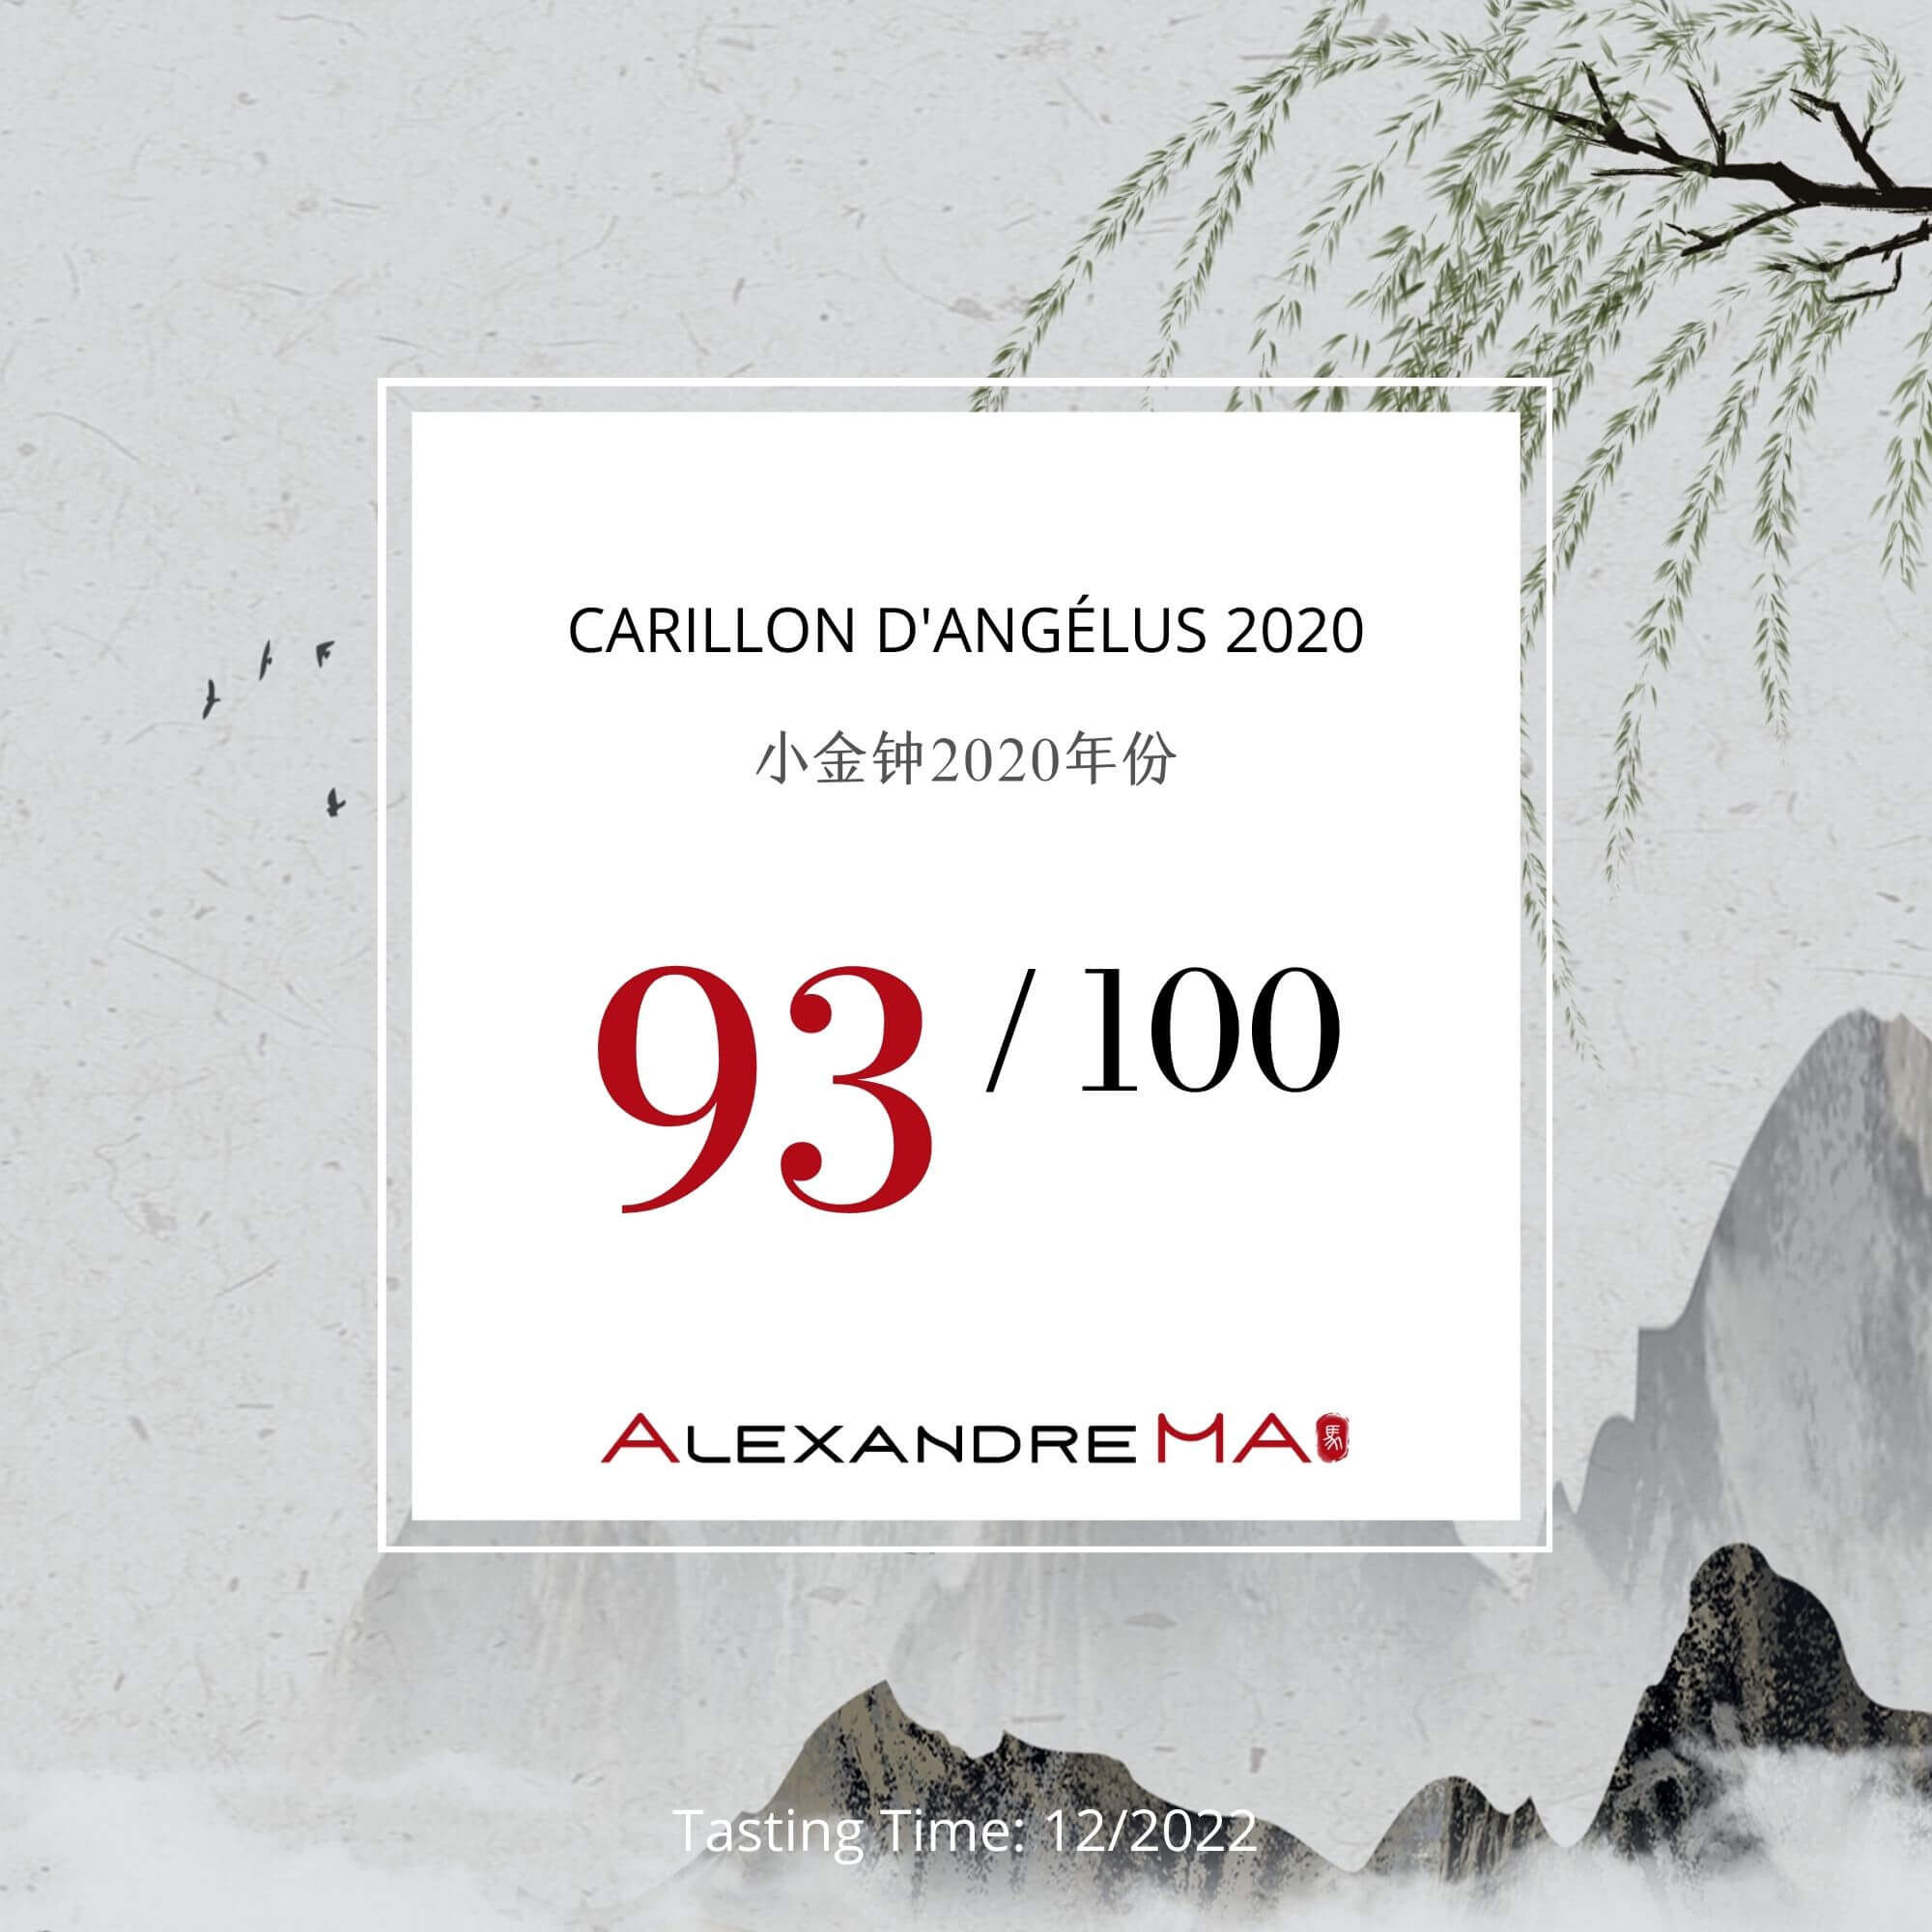 Carillon d’Angélus 2020 小金钟 - Alexandre Ma